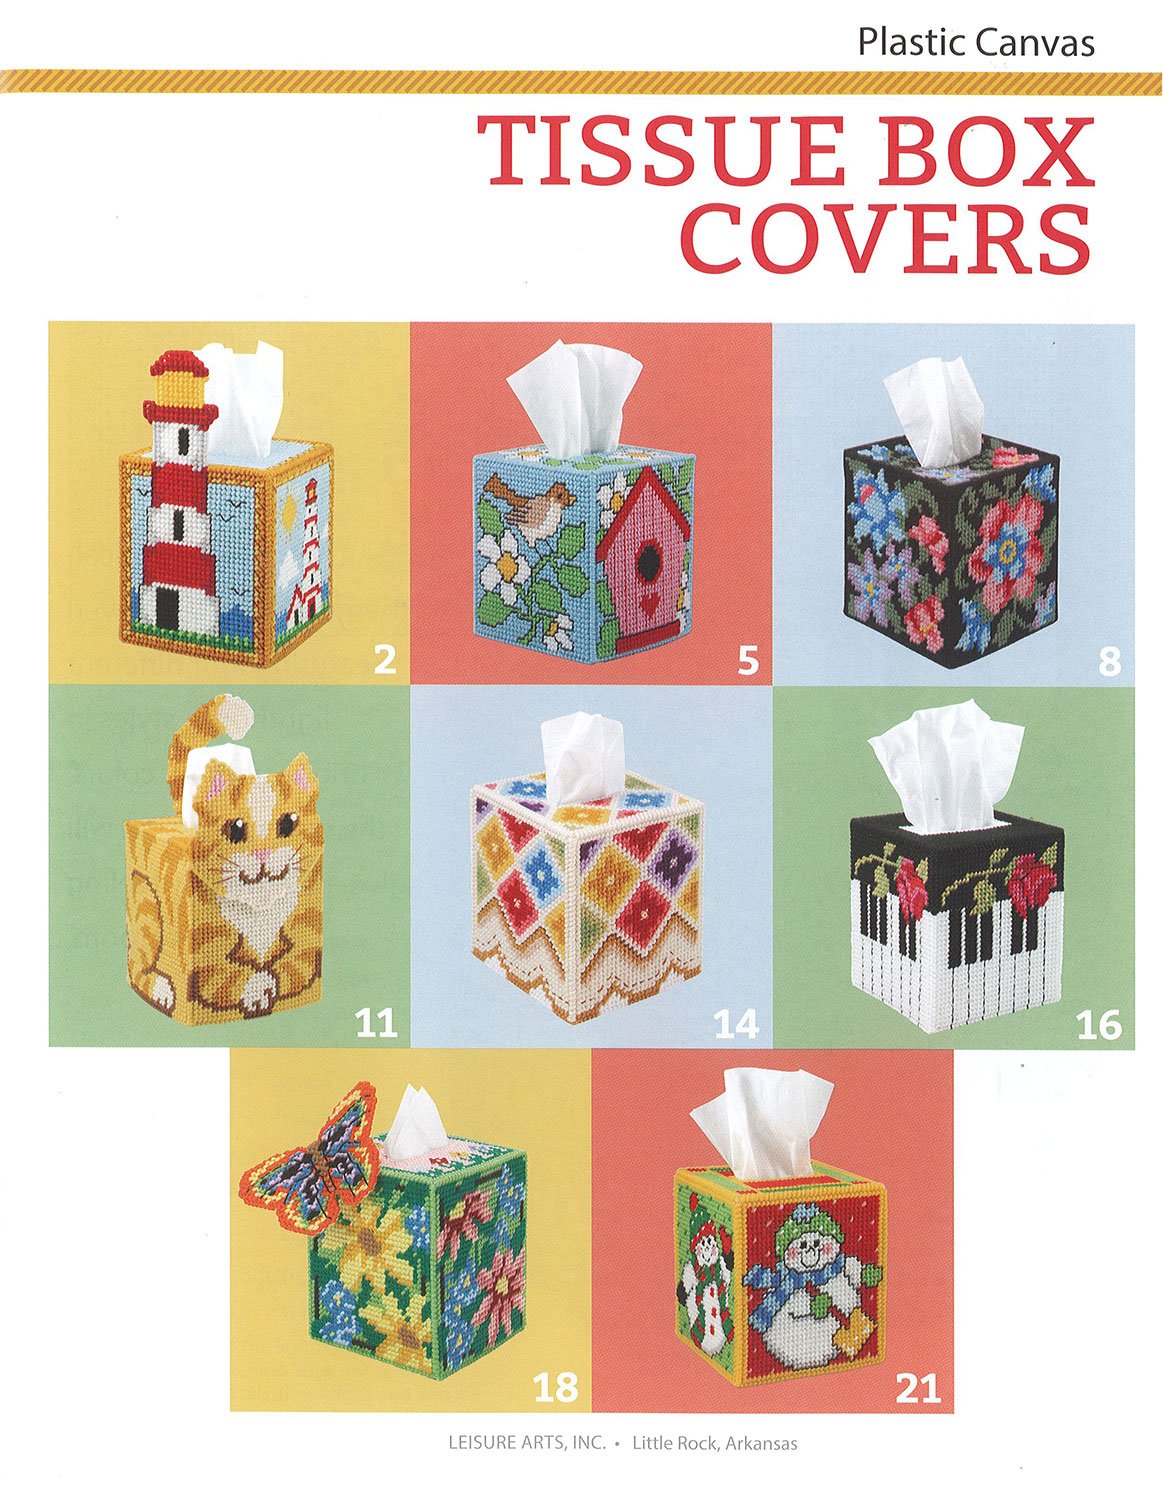 Leisure Arts Tissue Box Covers Platic Canvas Cross Stitch Book